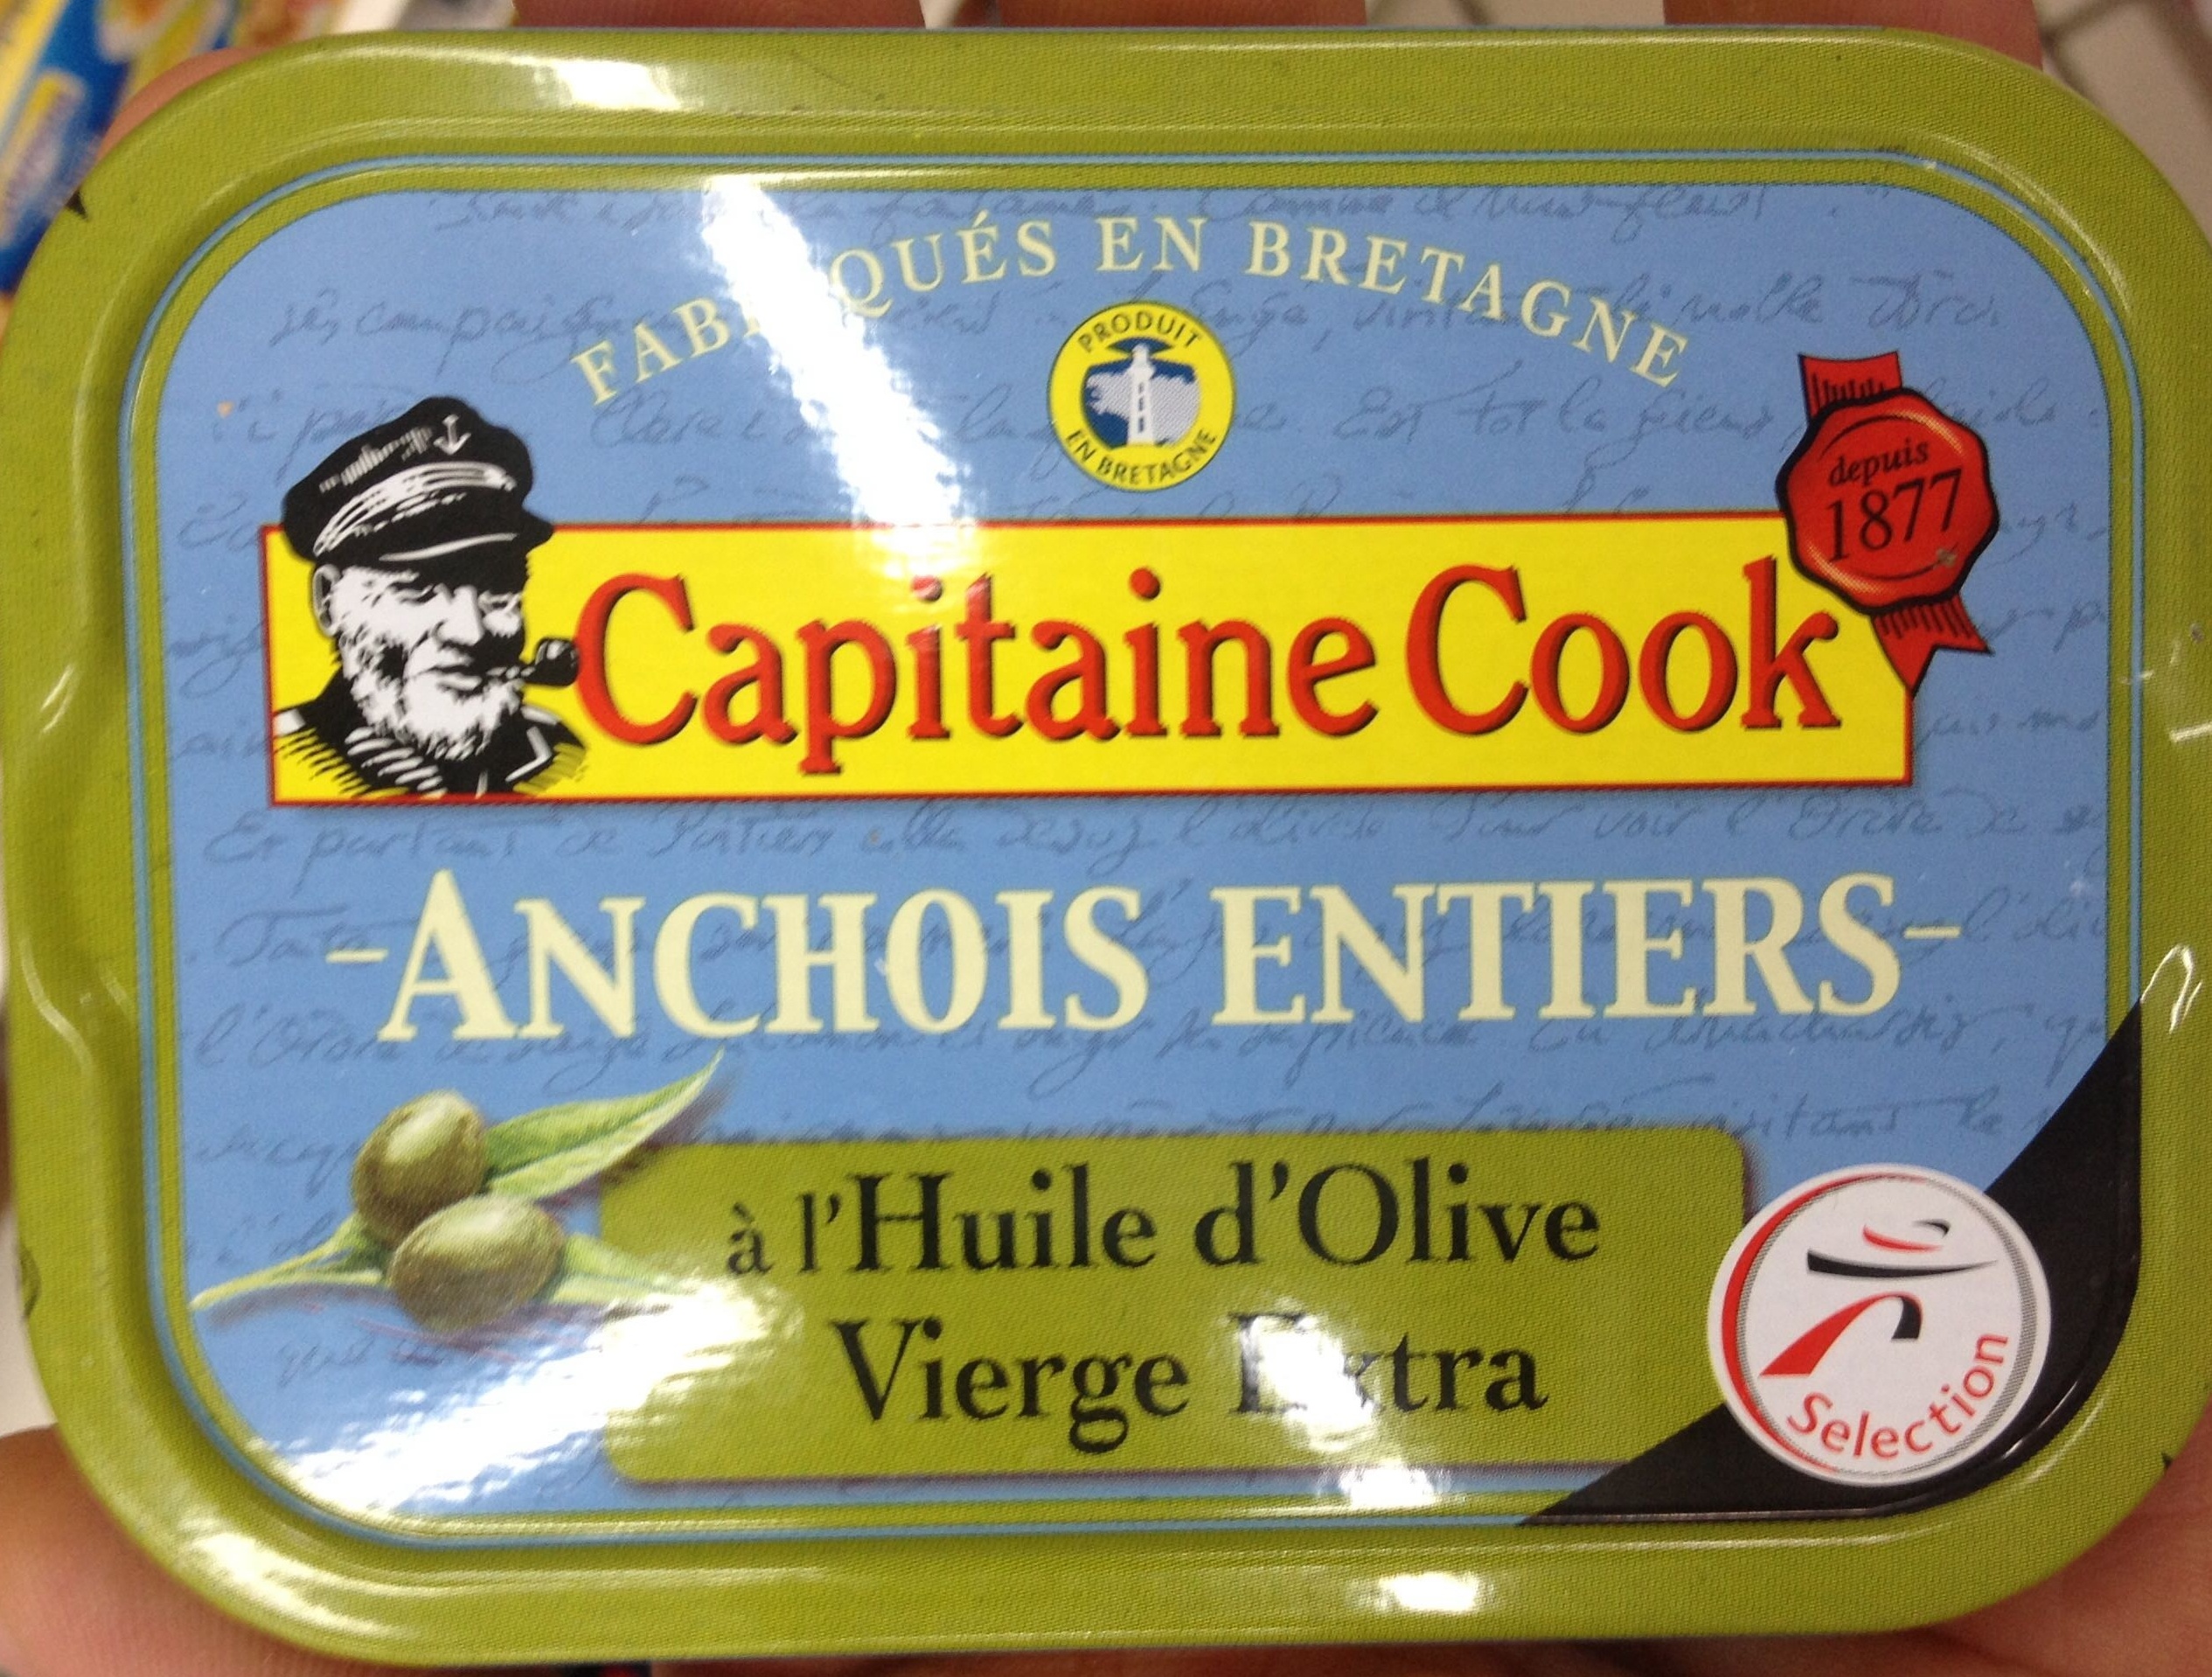 Anchois entiers à l'huile d'olive vierge extra - Product - fr